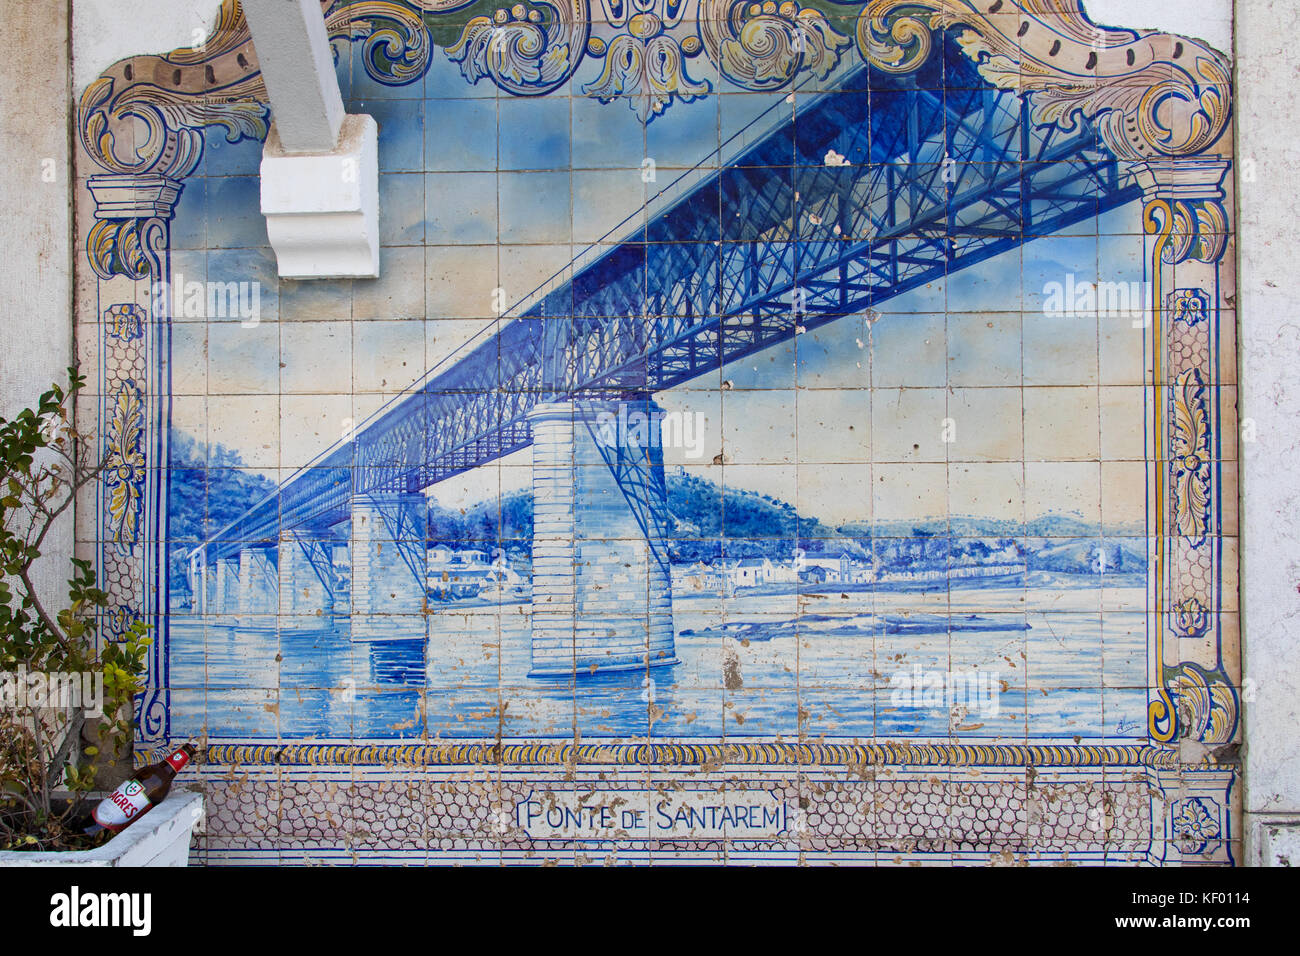 Blue ceramic tiles representing historic Ponte de Santarem, Santarem railway station, Portugal Stock Photo